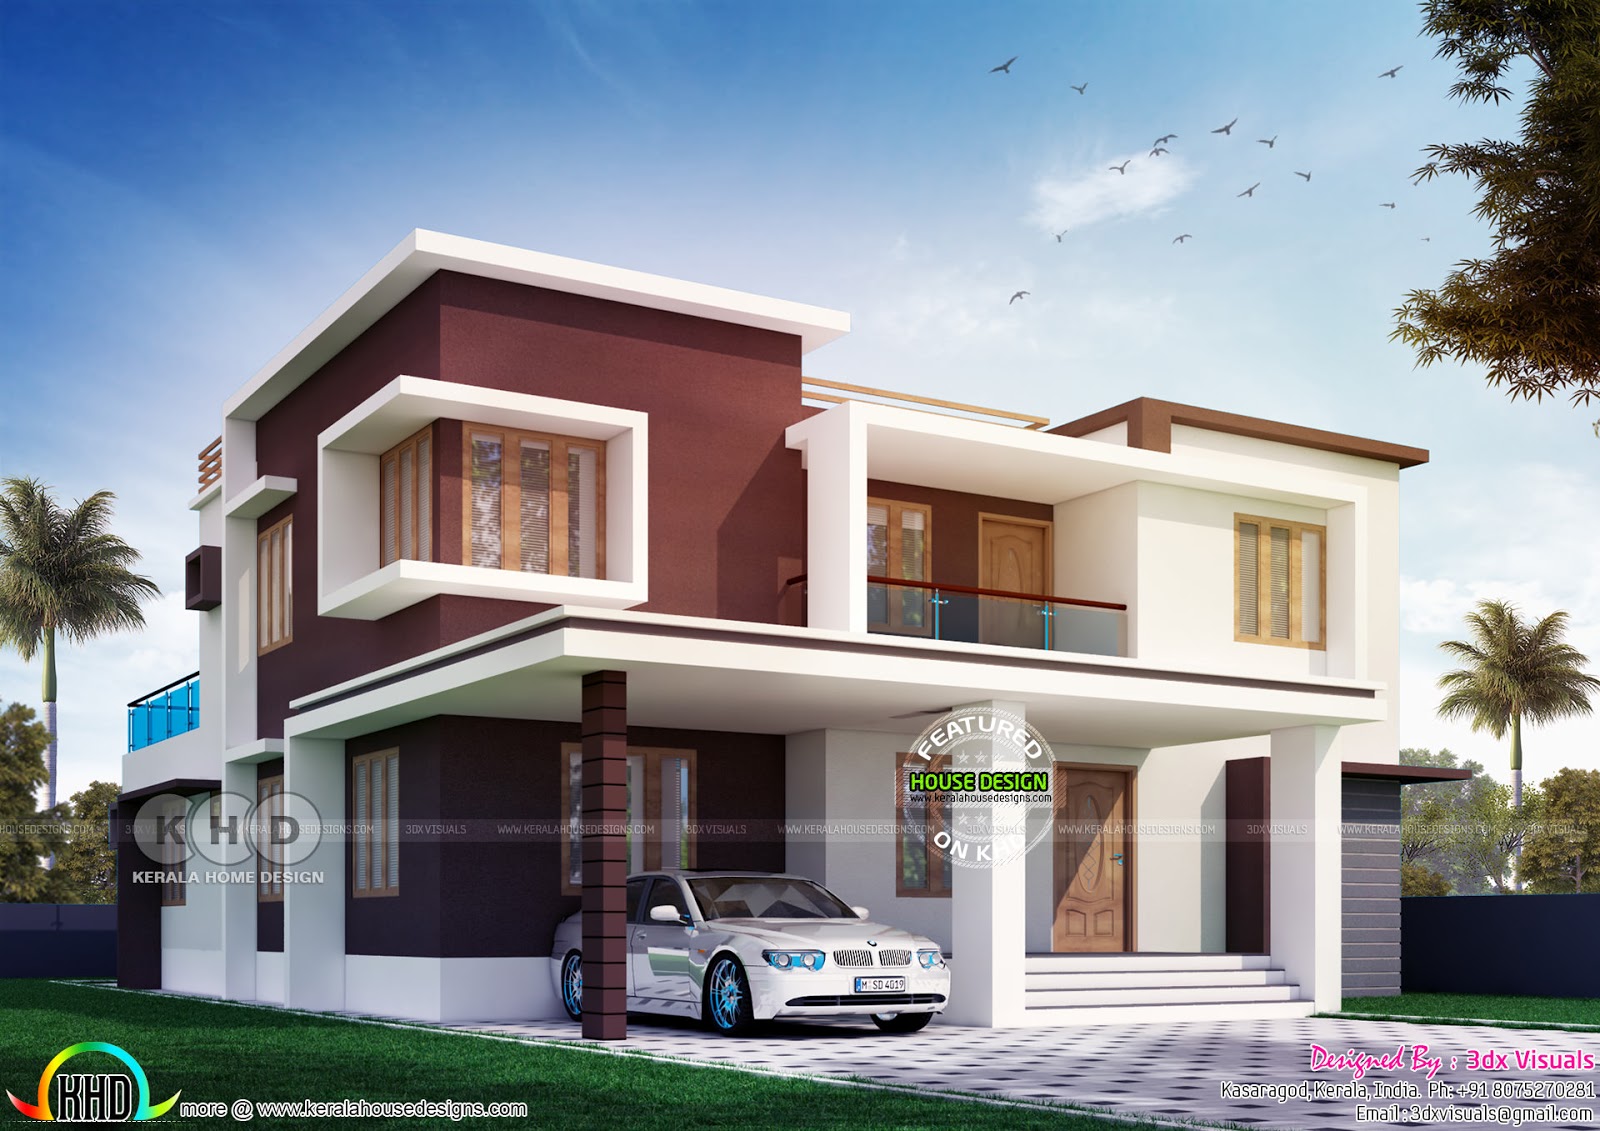 4 bedroom 2050 sqft flat roof contemporary Kerala home